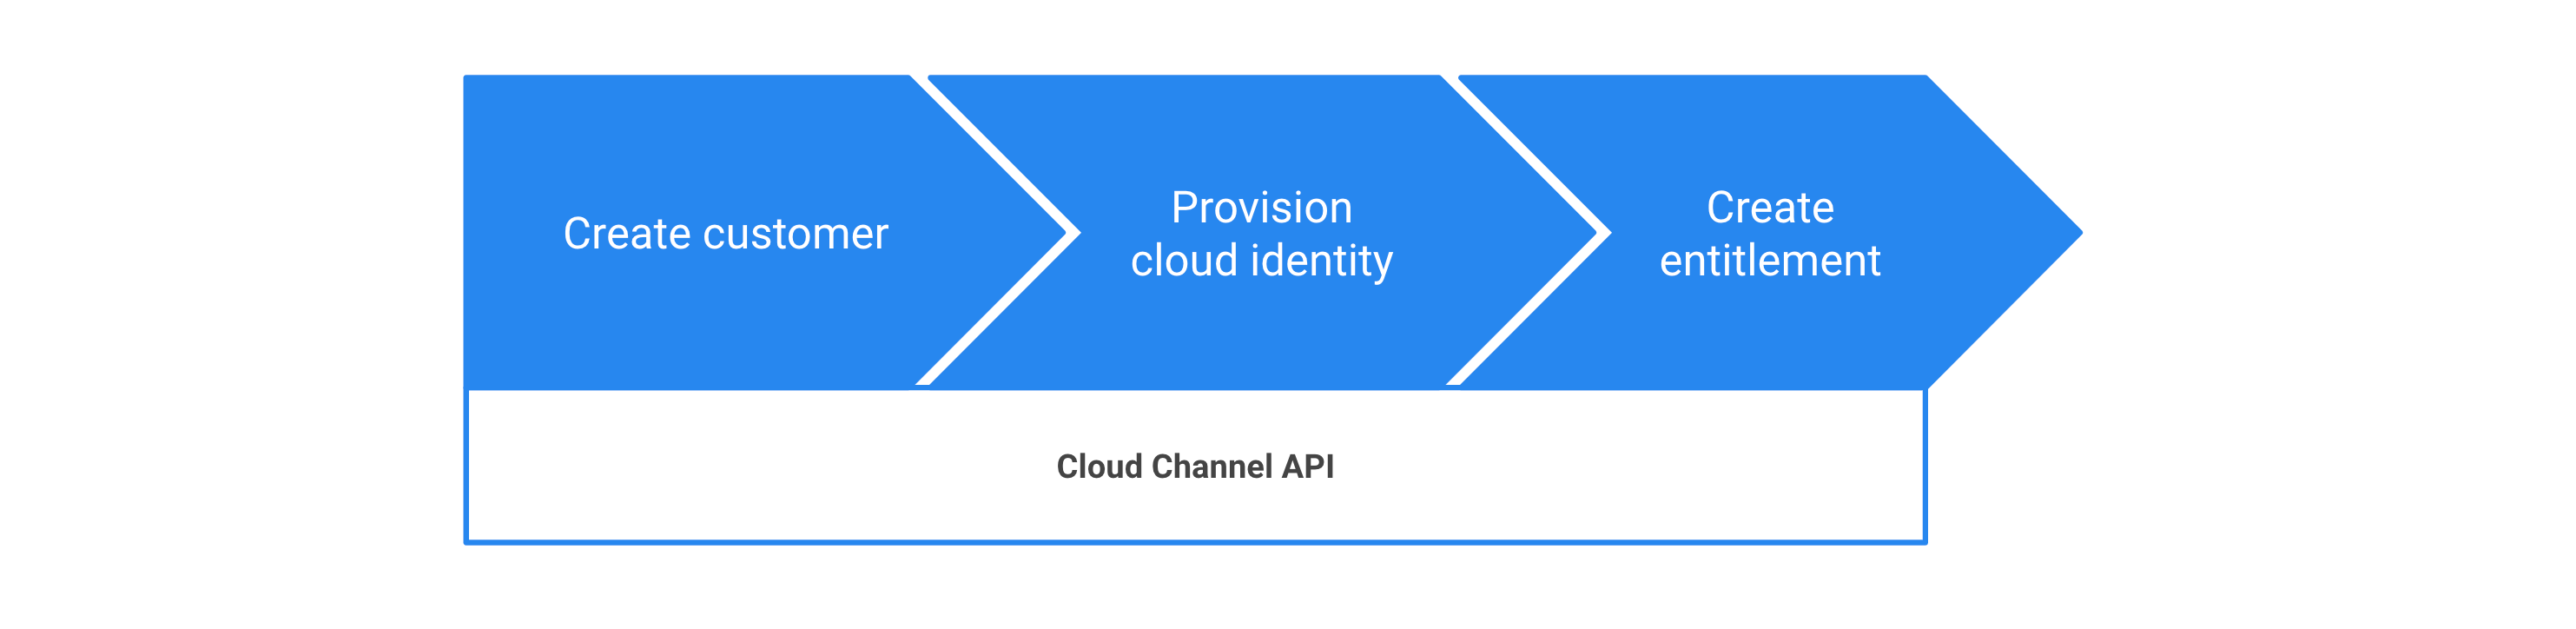 Cloud Channel API を使用して Google Workspace をプロビジョニングする手順